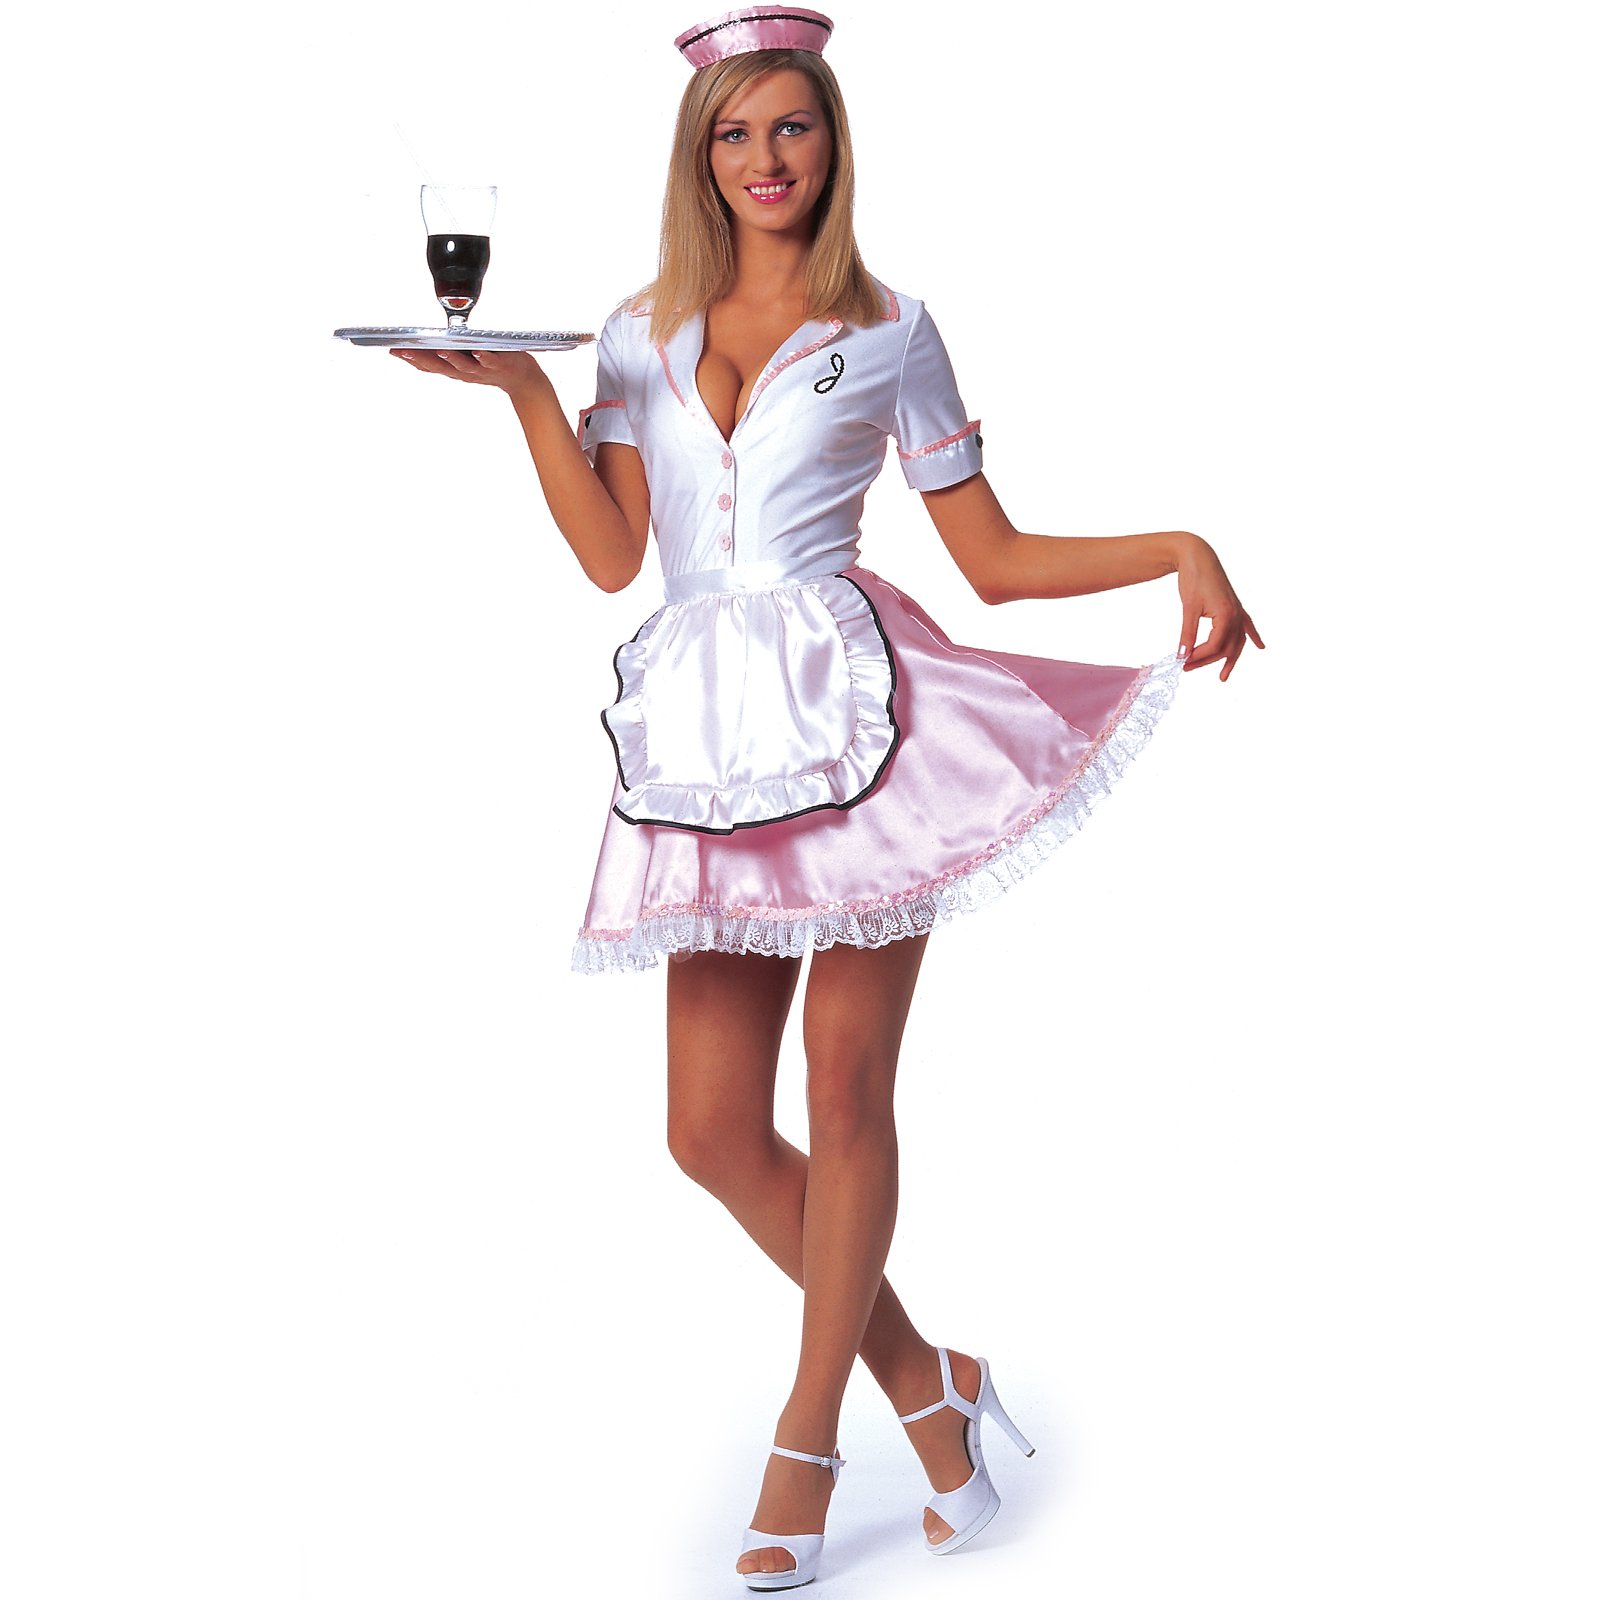 Provacative Dress Codes A Question Of Ethics In Restaurants Laura Macdonald S Blog